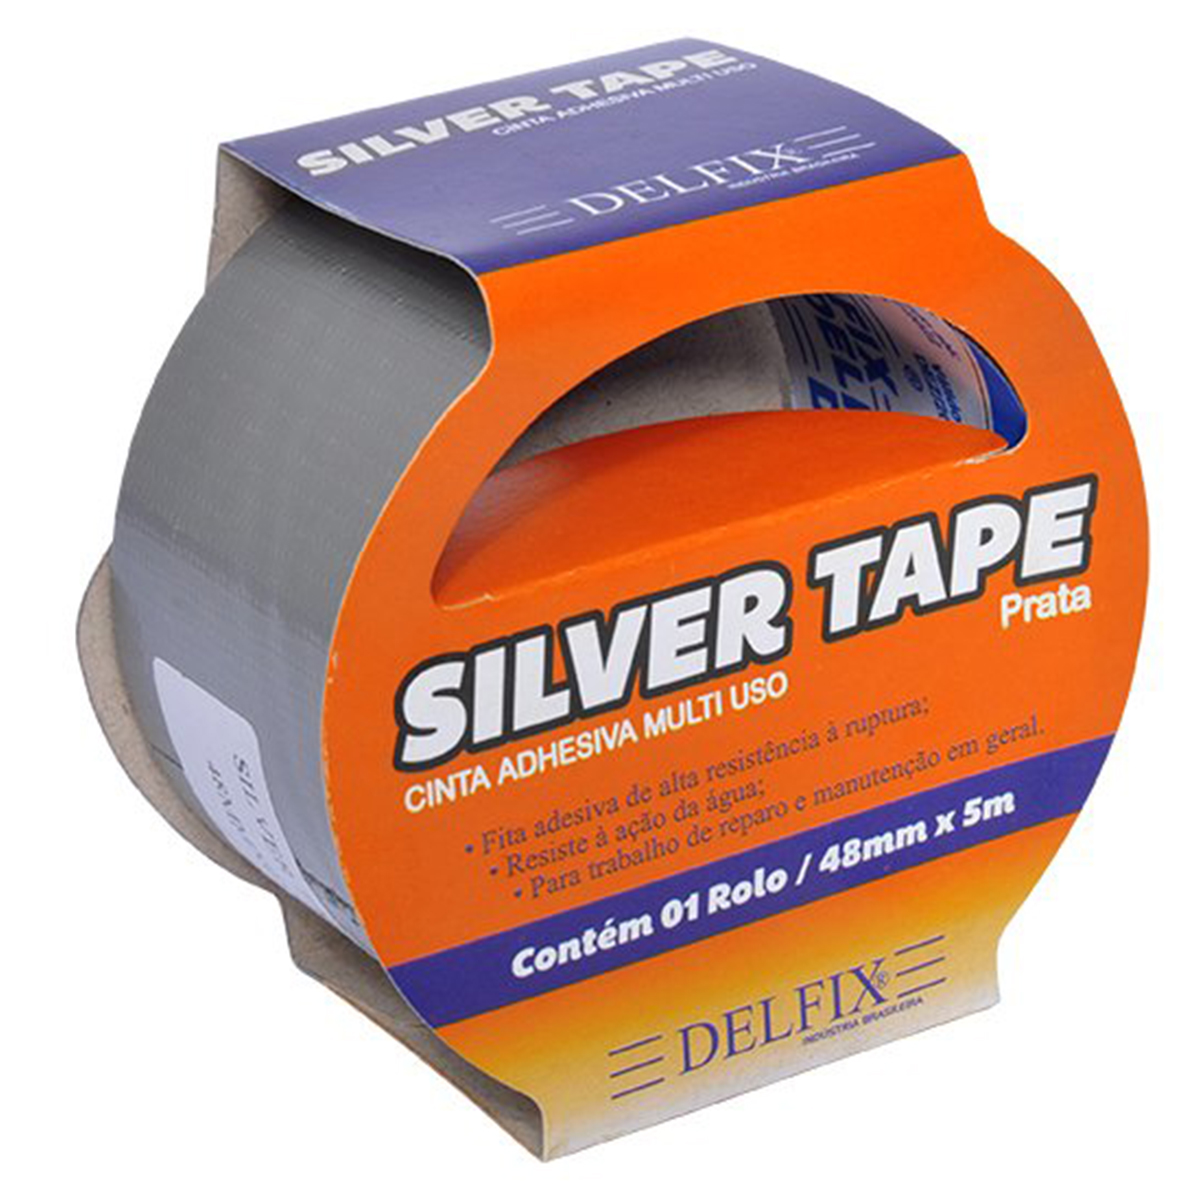 Silver Tape 48mm X 5m Delfix – Prata